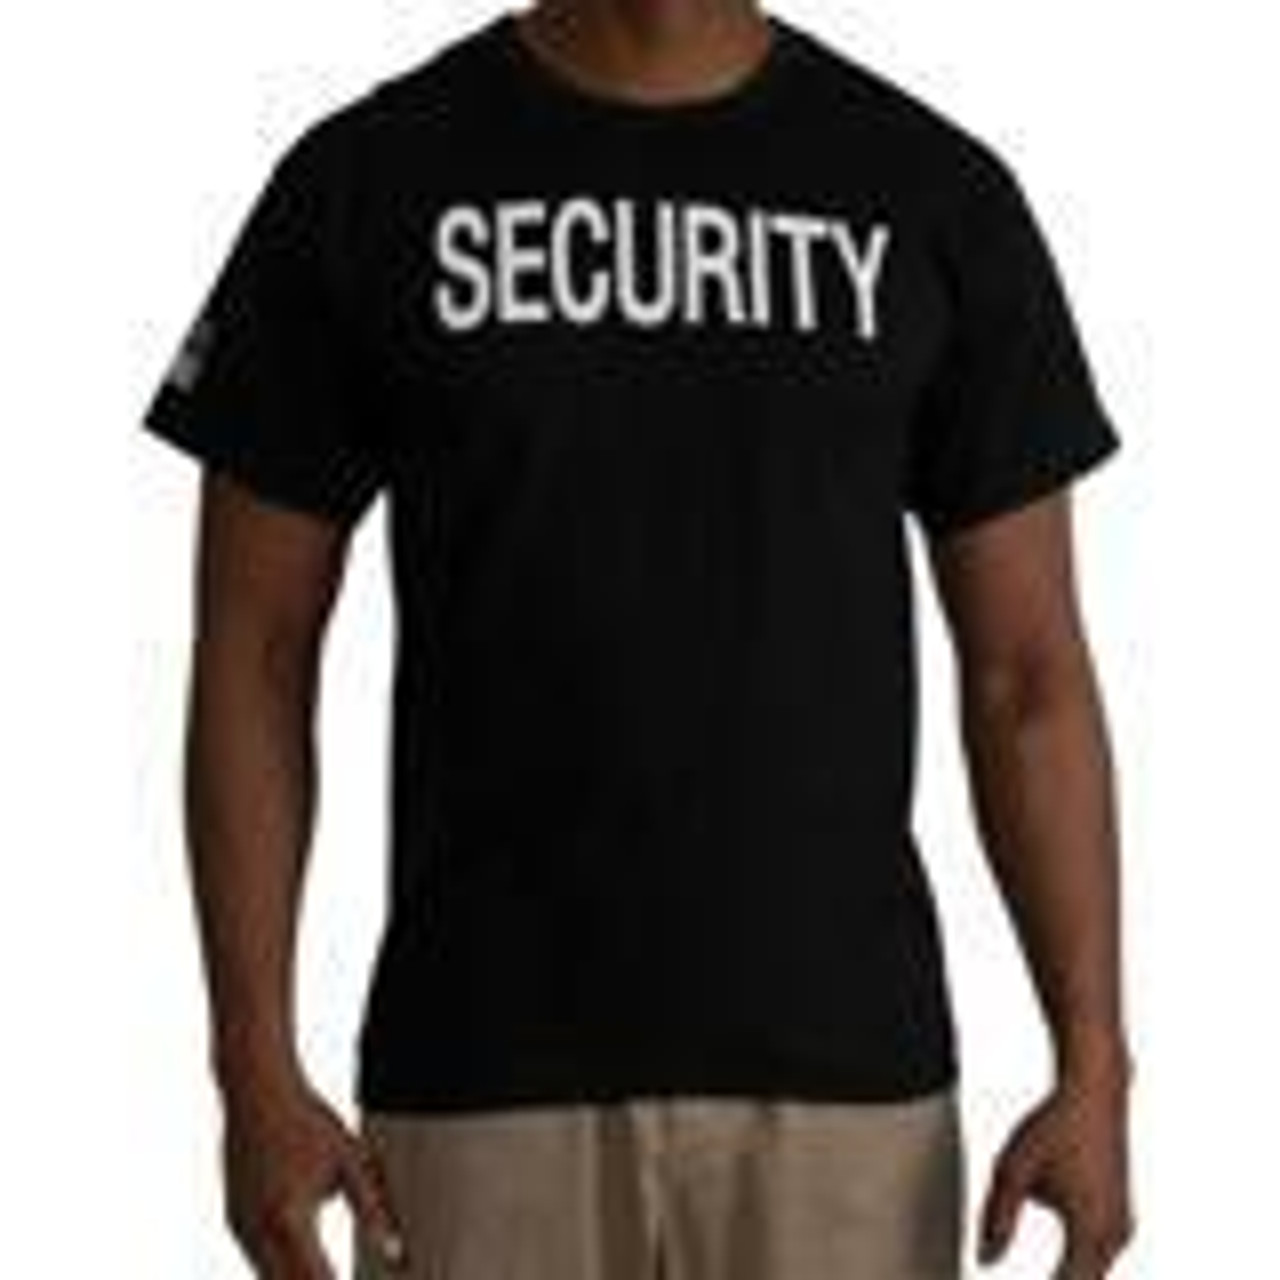 Public Safety T-shirts